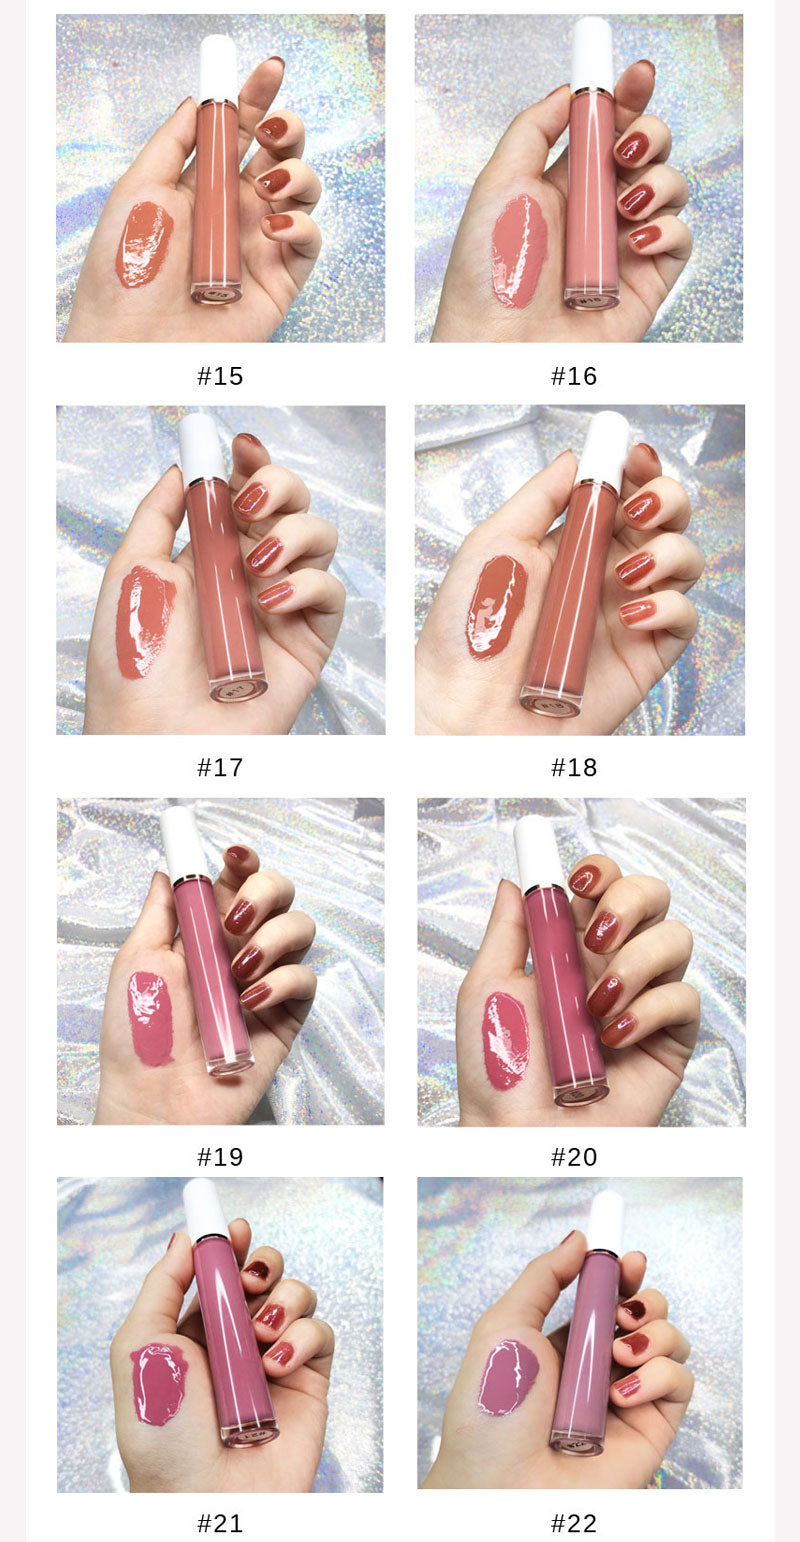 Benutzerdefiniertes Logo Moisture Lipgloss Nude Vegan Glossy Clear Liquid Lipstick Private Label Big Wand Lip Gloss 